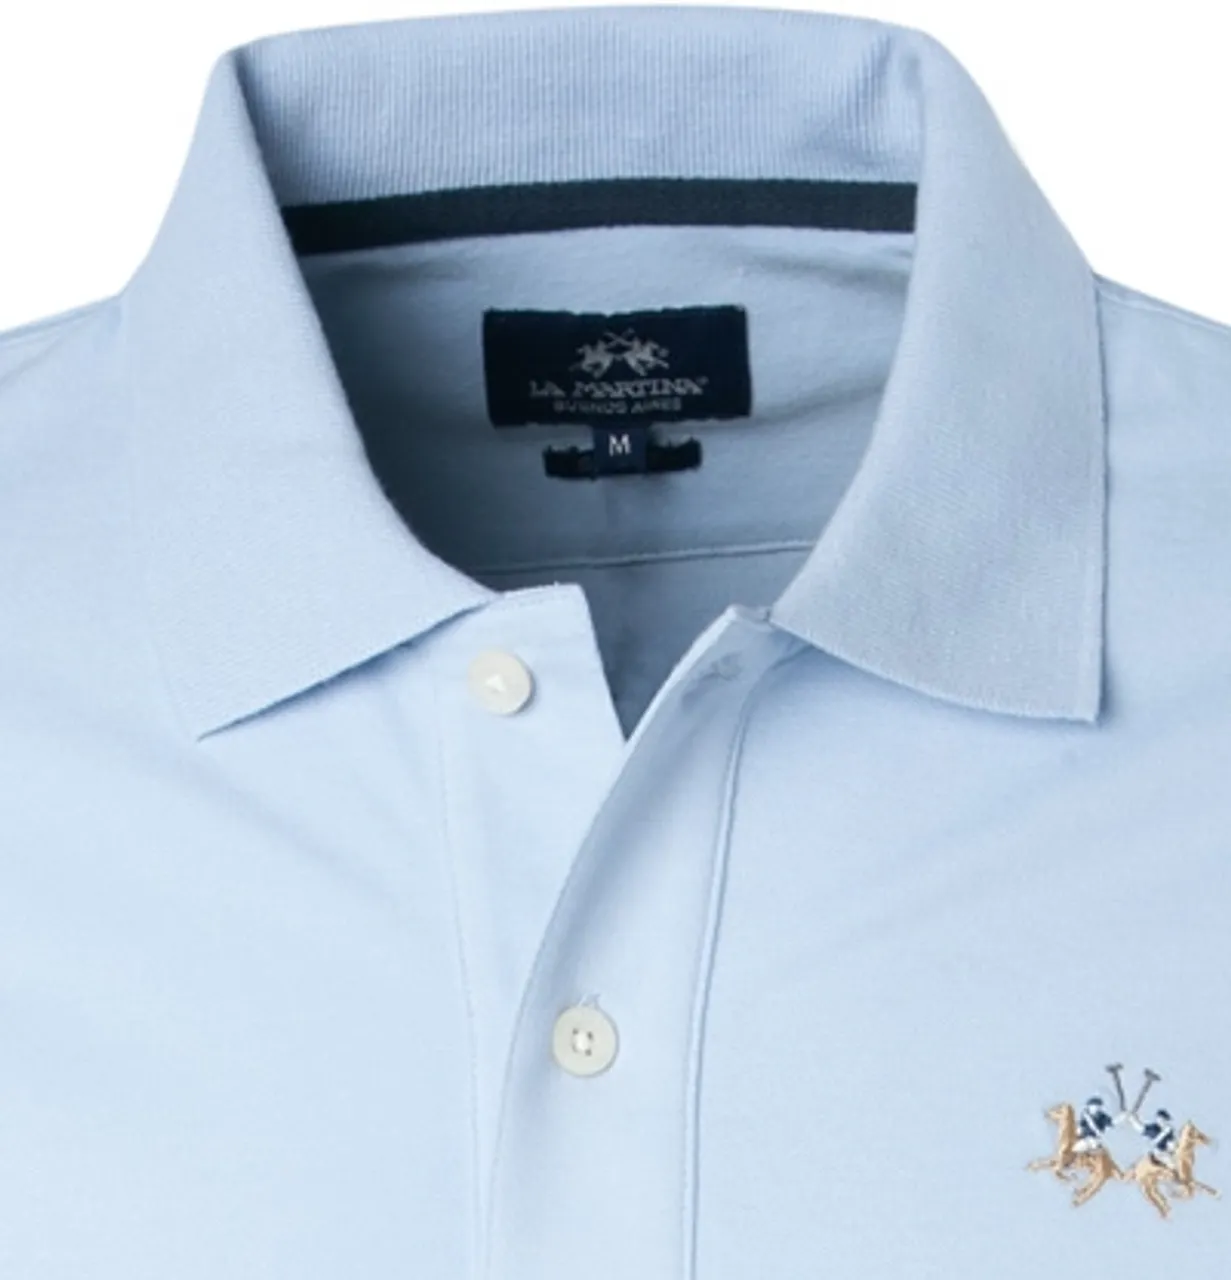 LA MARTINA Herren Polo-Shirt blau Baumwoll-Piqué Slim Fit